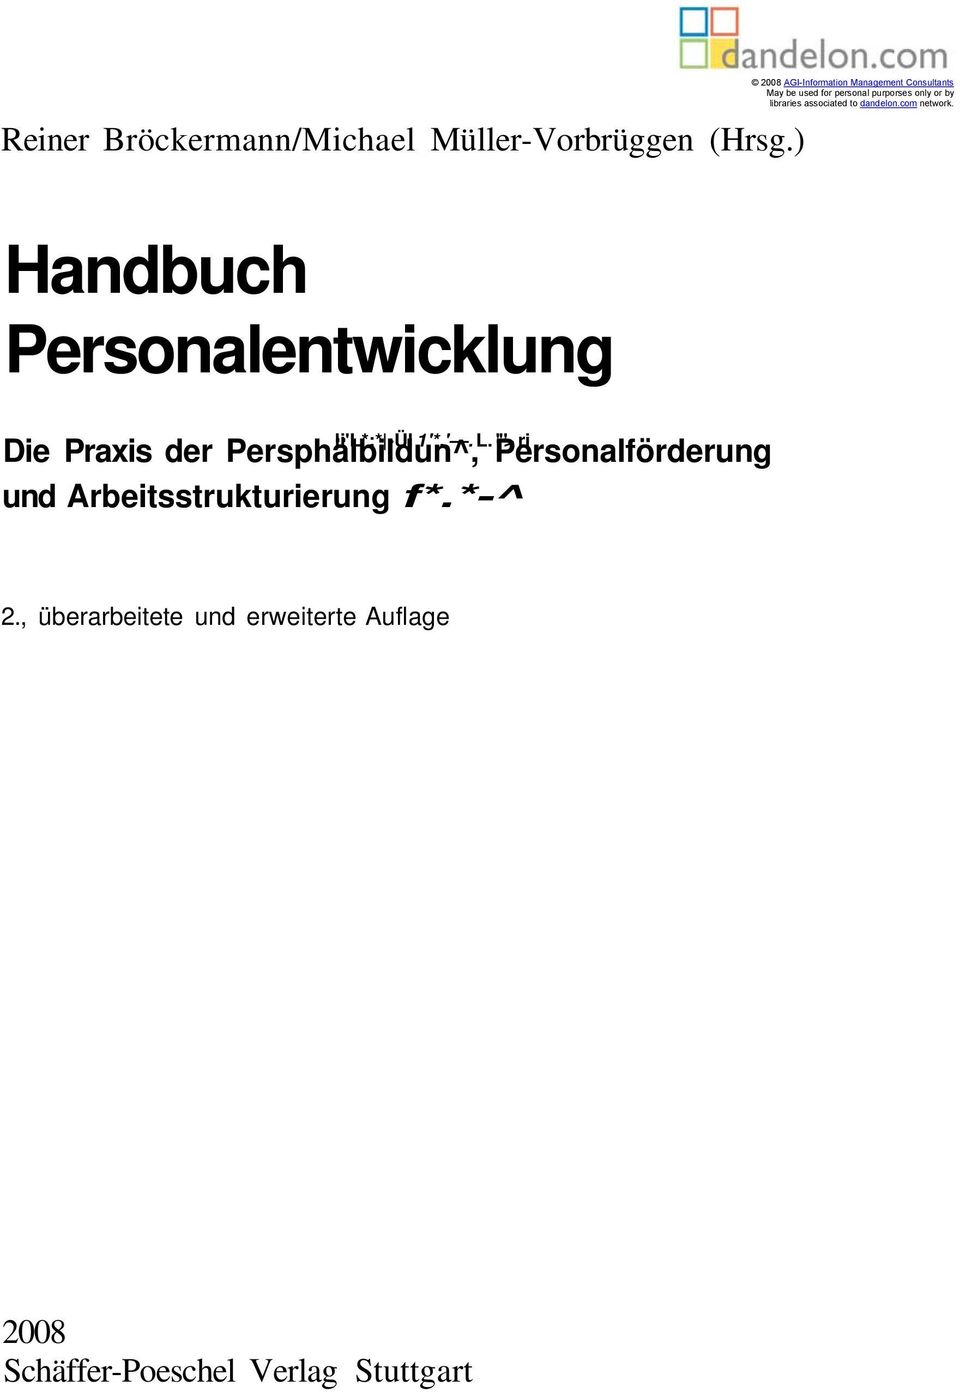 associated to dandelon.com network. Handbuch Personalentwicklung li'l*:* -Ül 1'*.'. L.